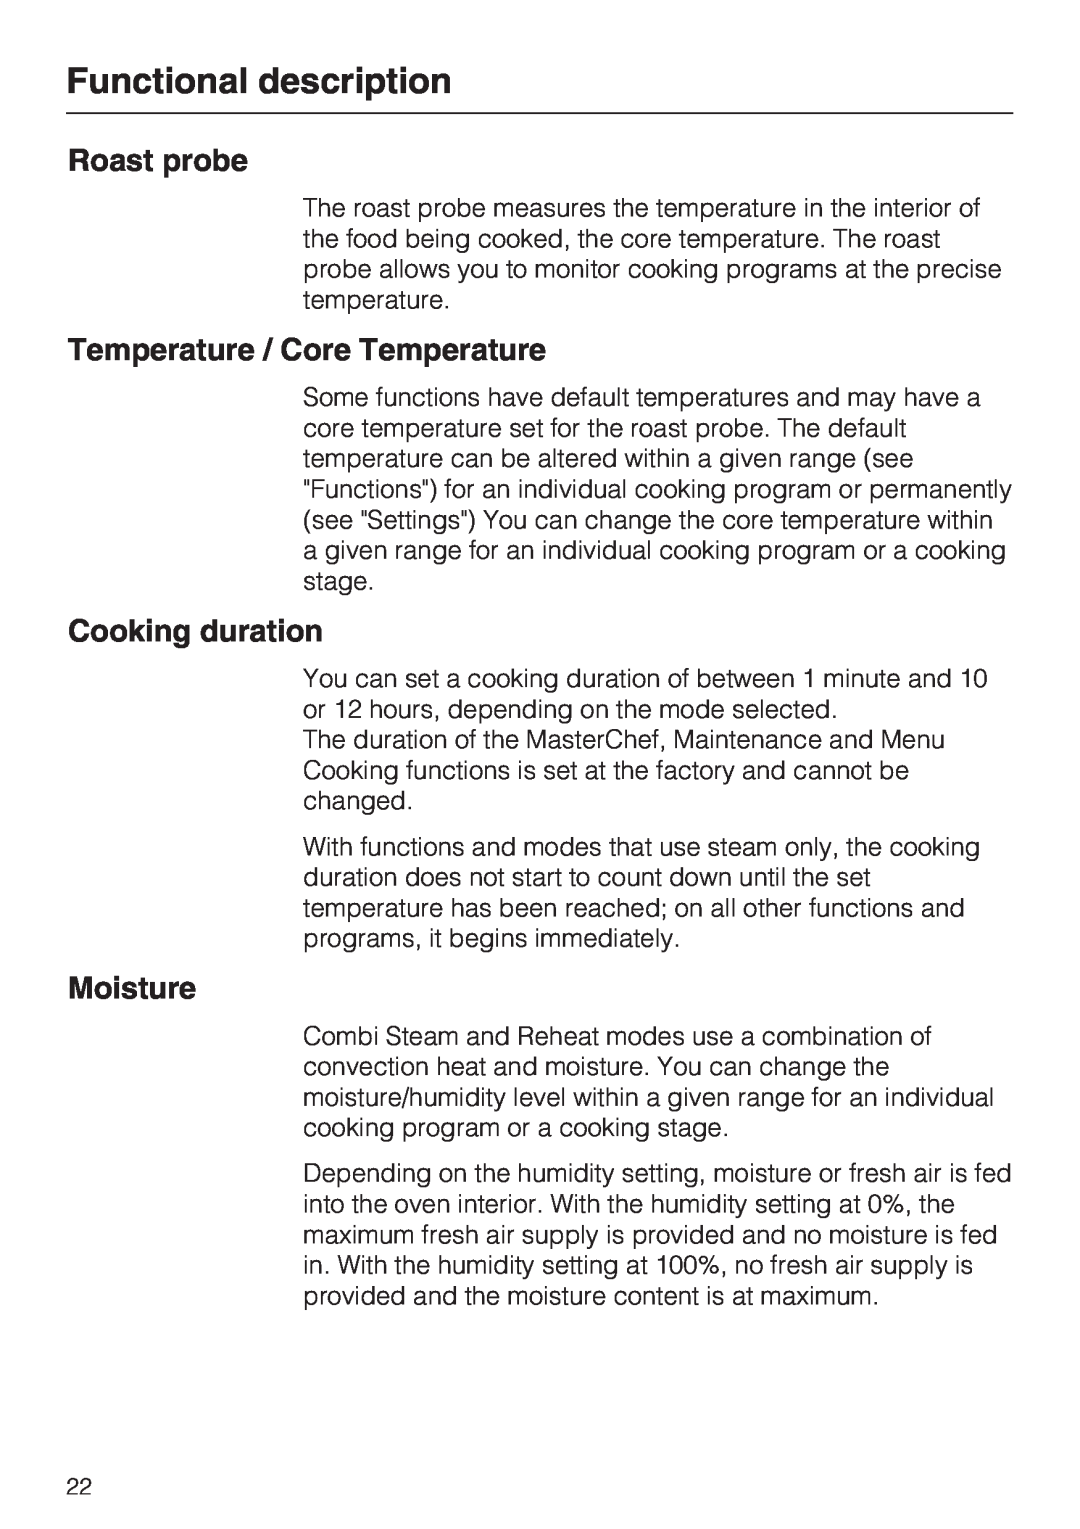 Miele 09 855 050 Roast probe, Temperature / Core Temperature, Cooking duration, Moisture, Functional description 